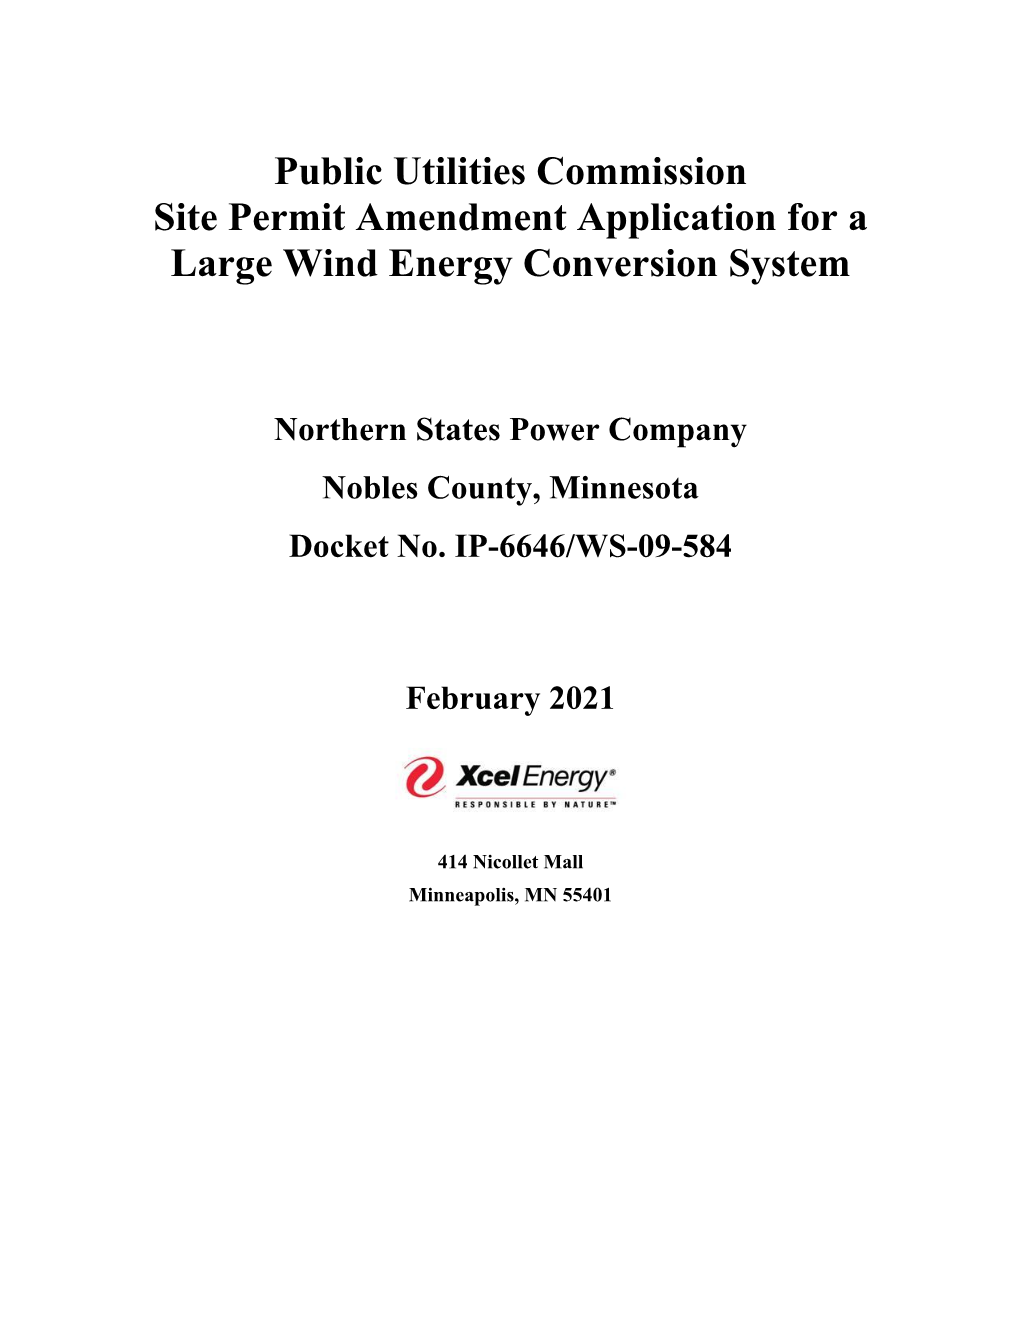 Public Utilities Commission Site Permit Amendment Application for a Large Wind Energy Conversion System